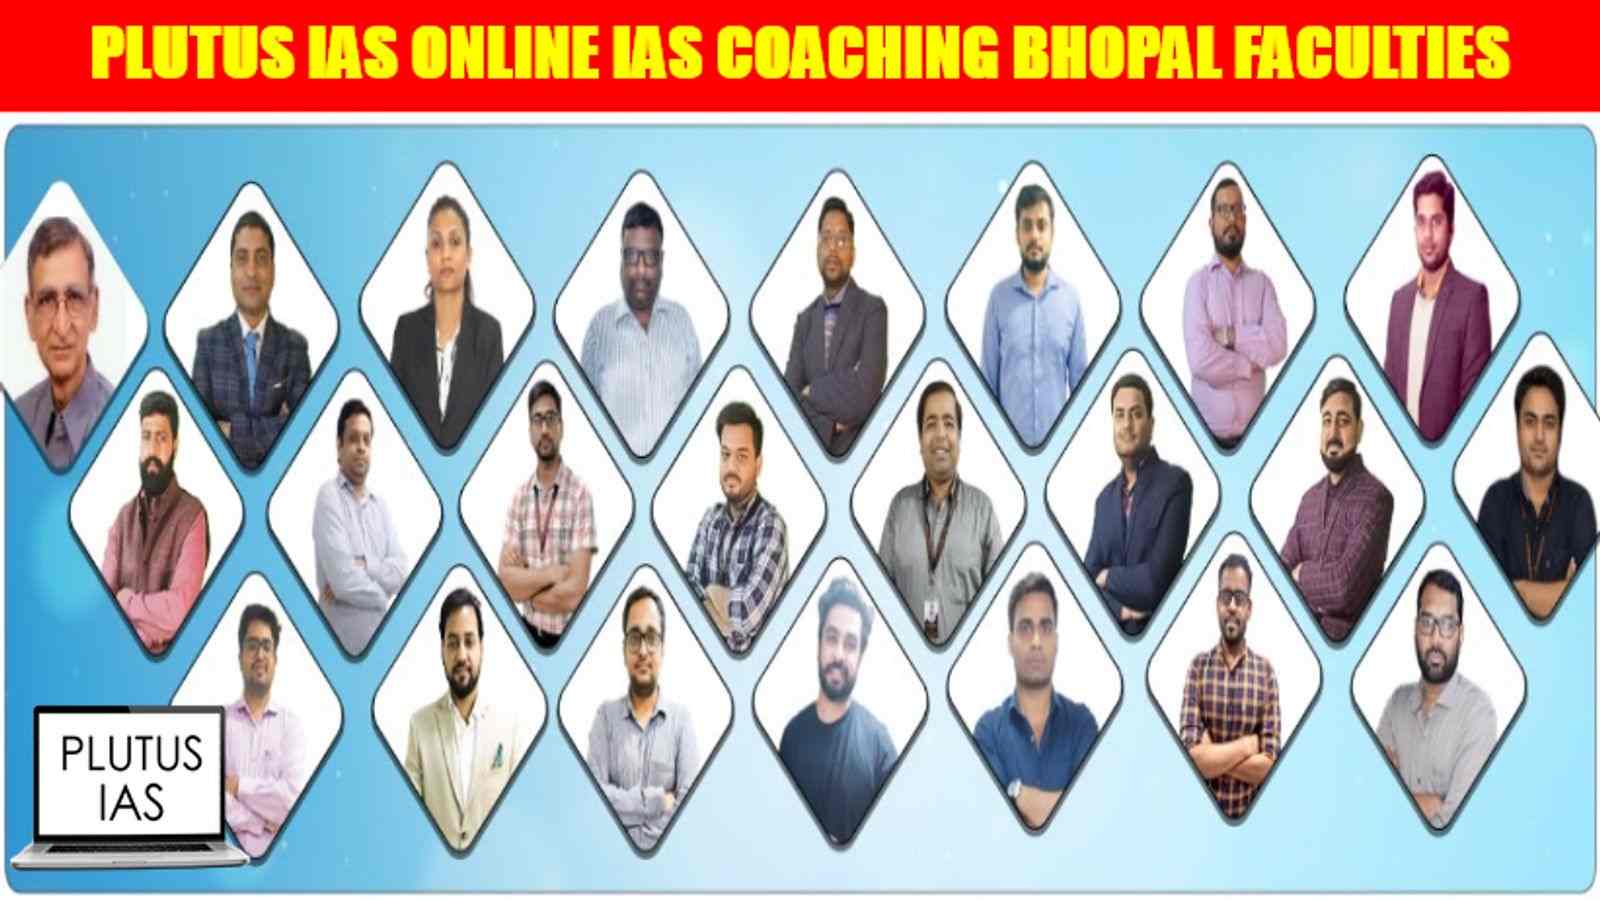 Plutus IAS Online Coaching Bhopal Faculties